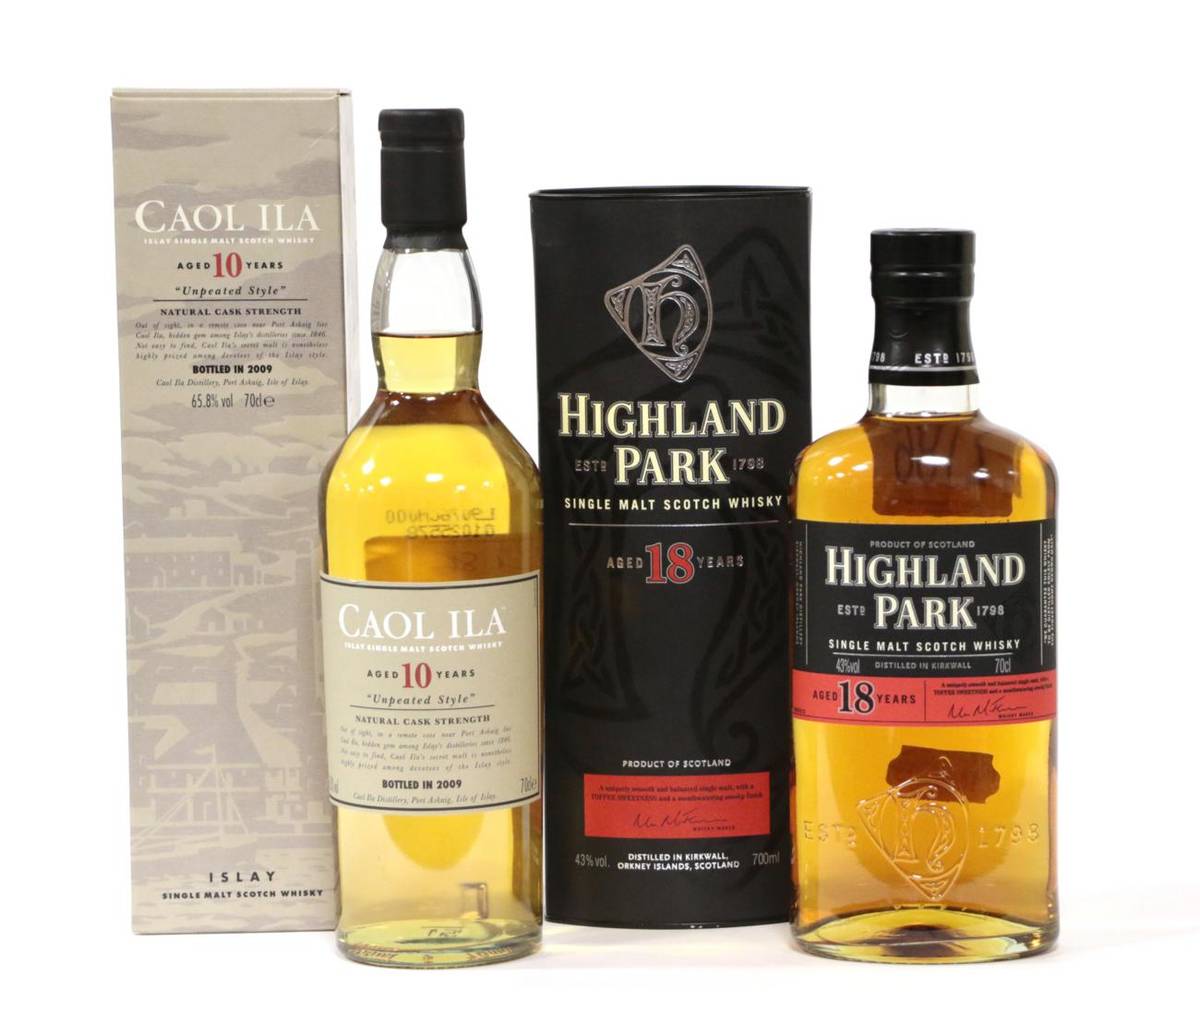 Lot 2186 - Highland Park Single Malt Scotch Whisky, 18 years old, 43%, 70cl, Caol Ila 10 Year Old Islay Single